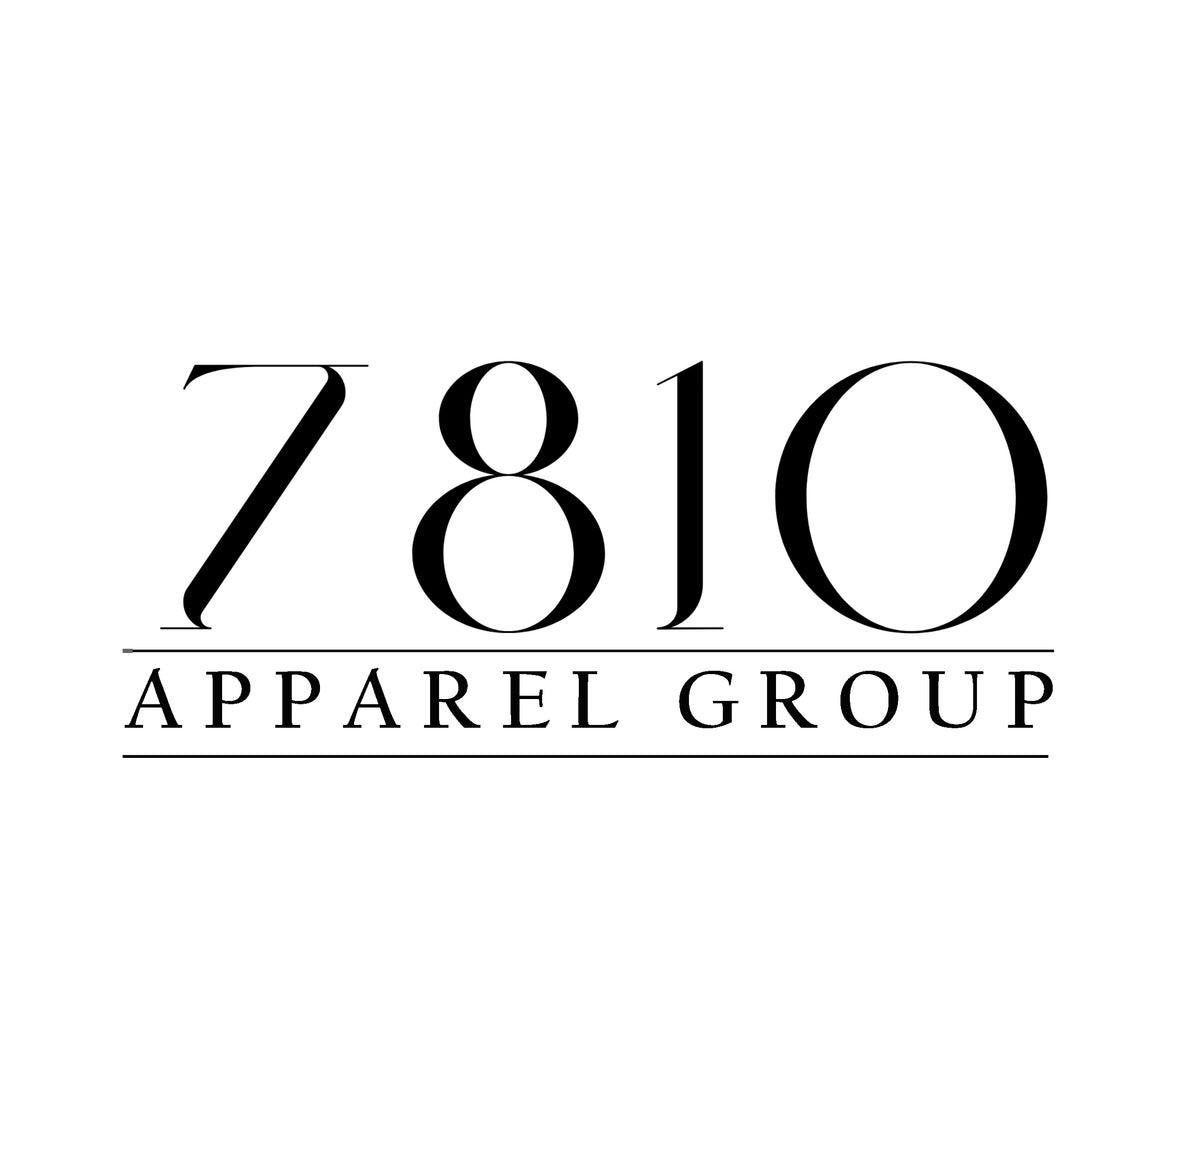 7810 Apparel Group